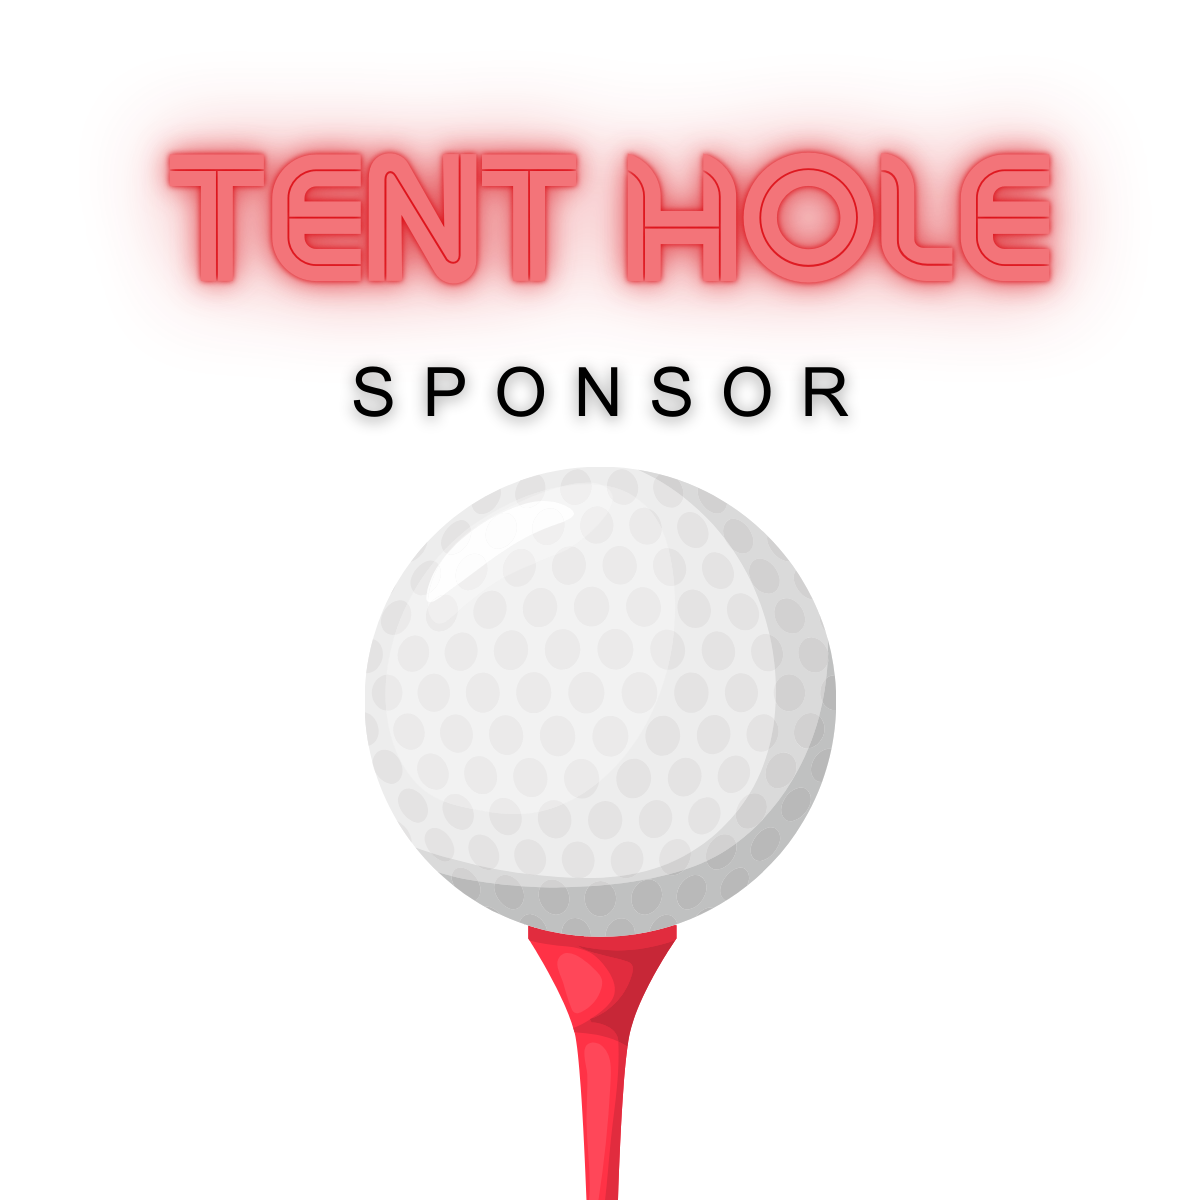 Tent Hole Sponsor - Mid-Con Open